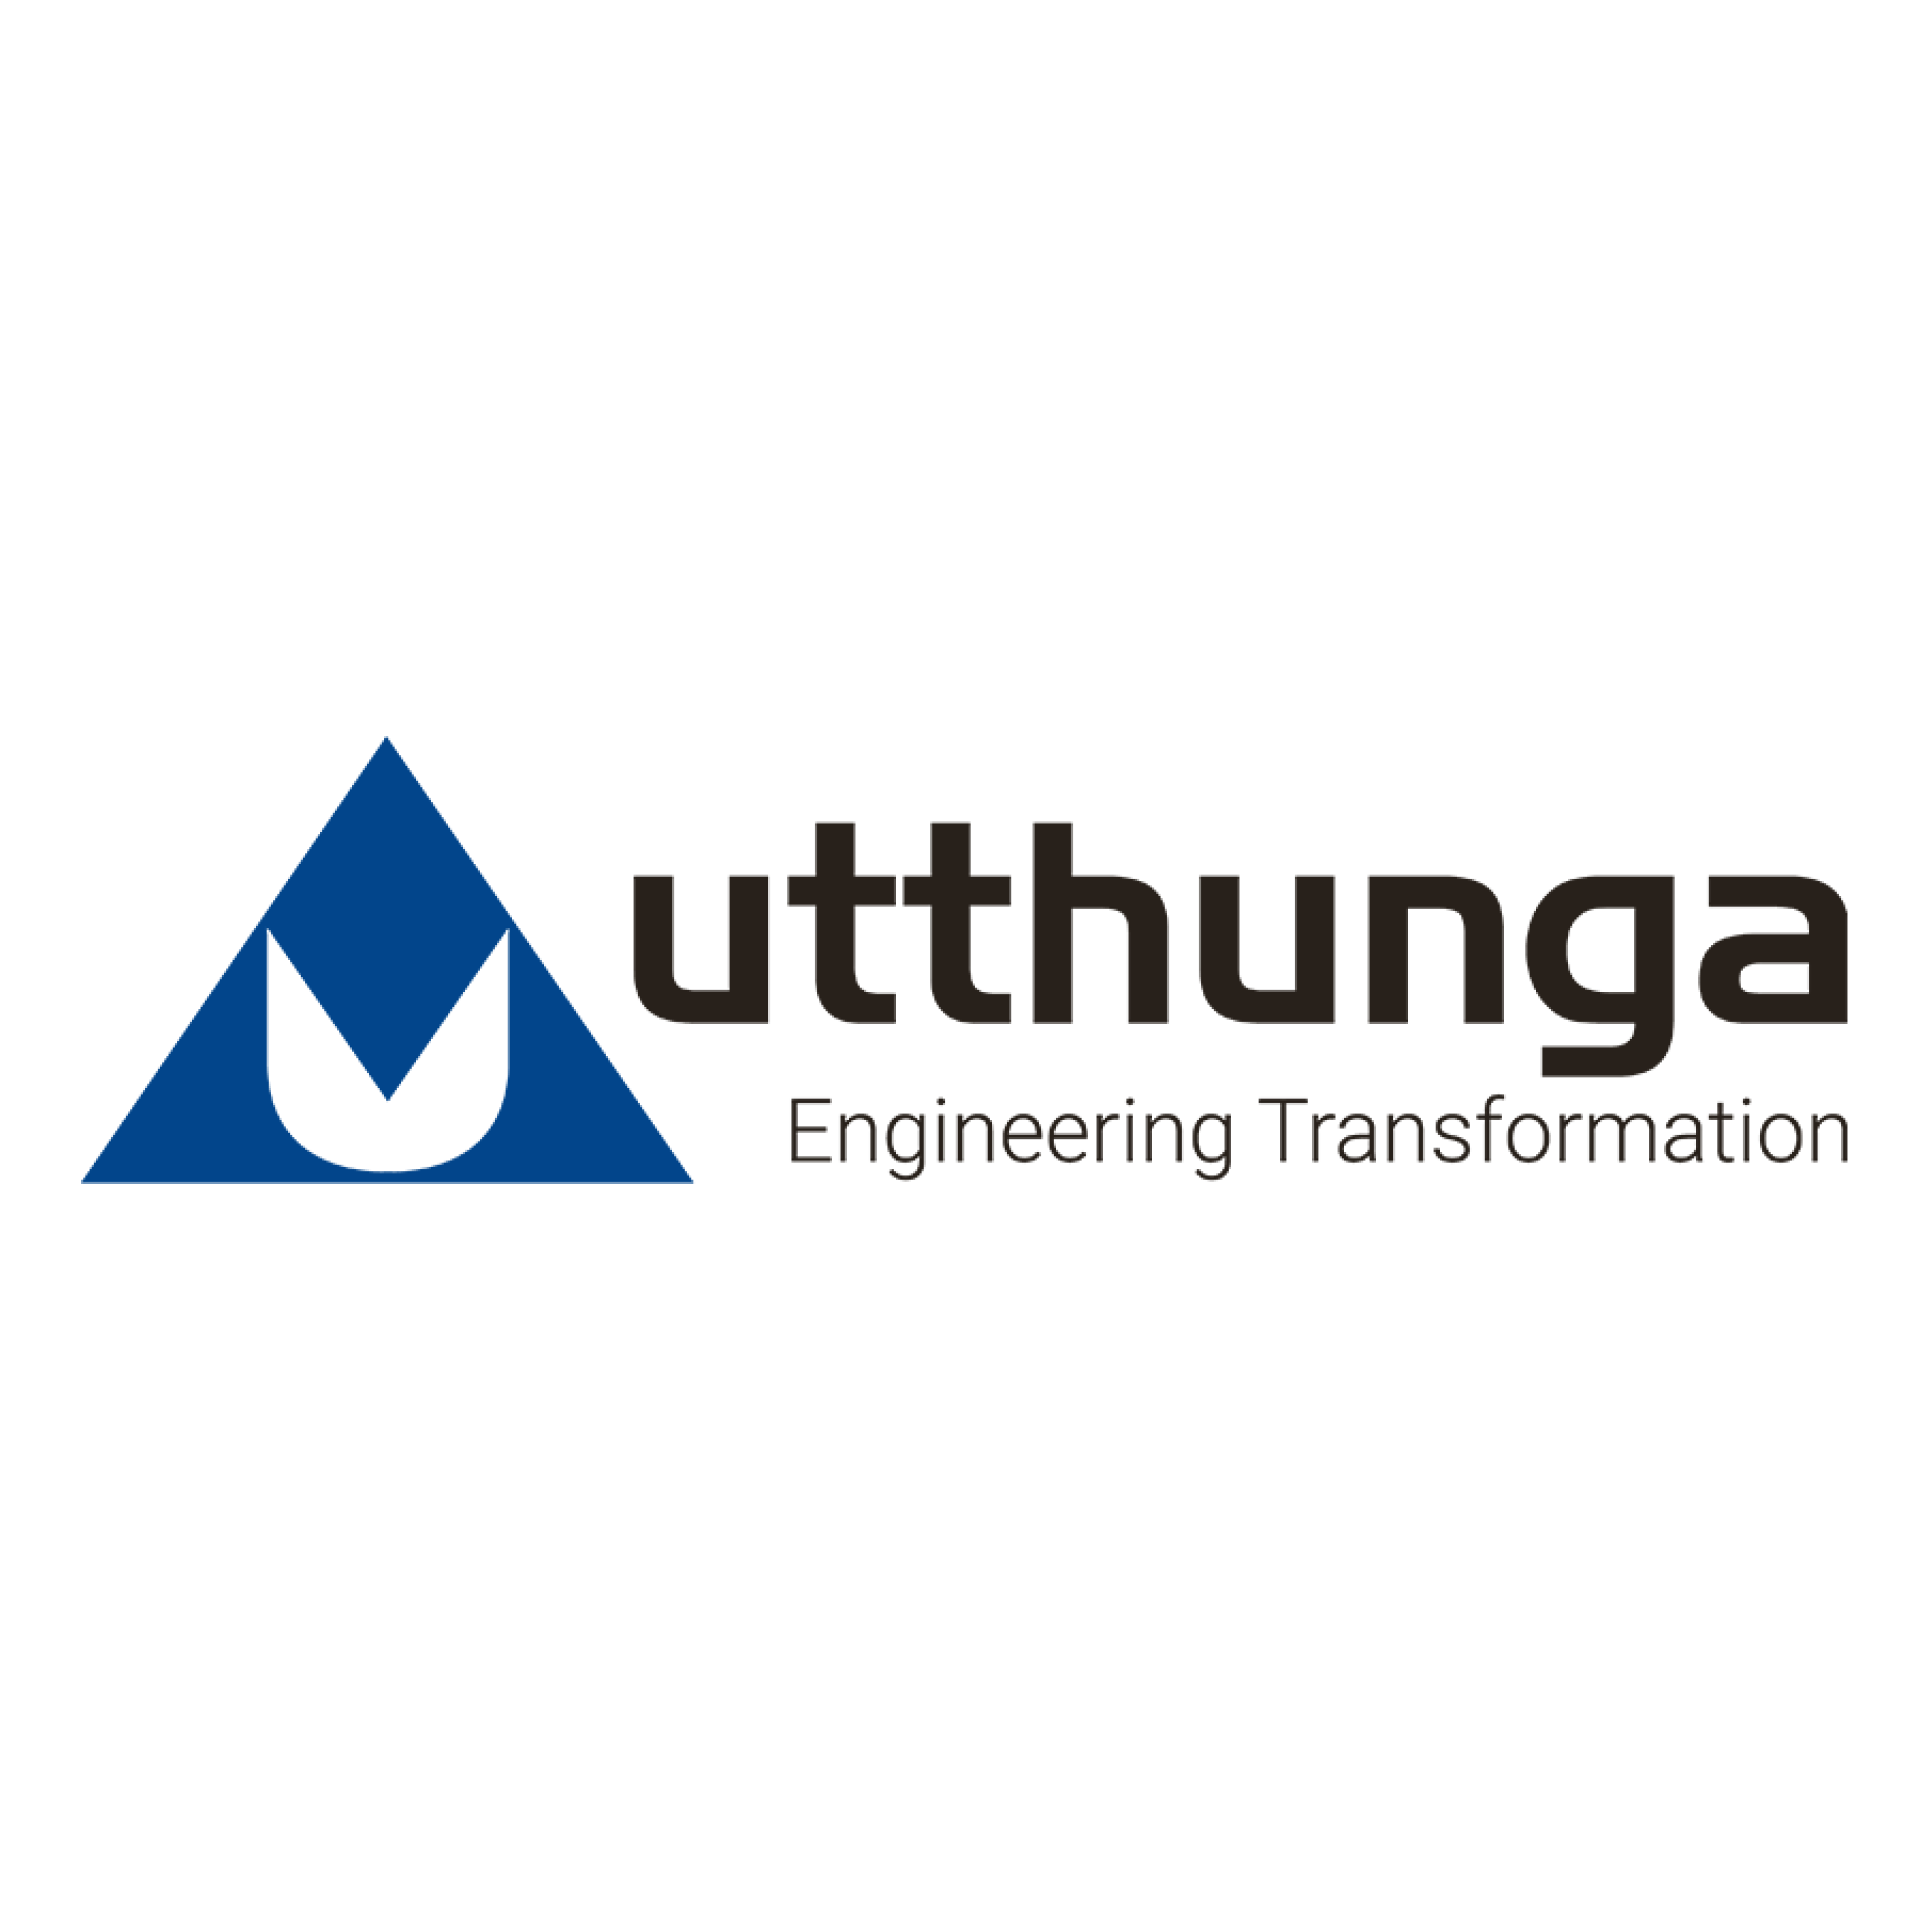 utthunga